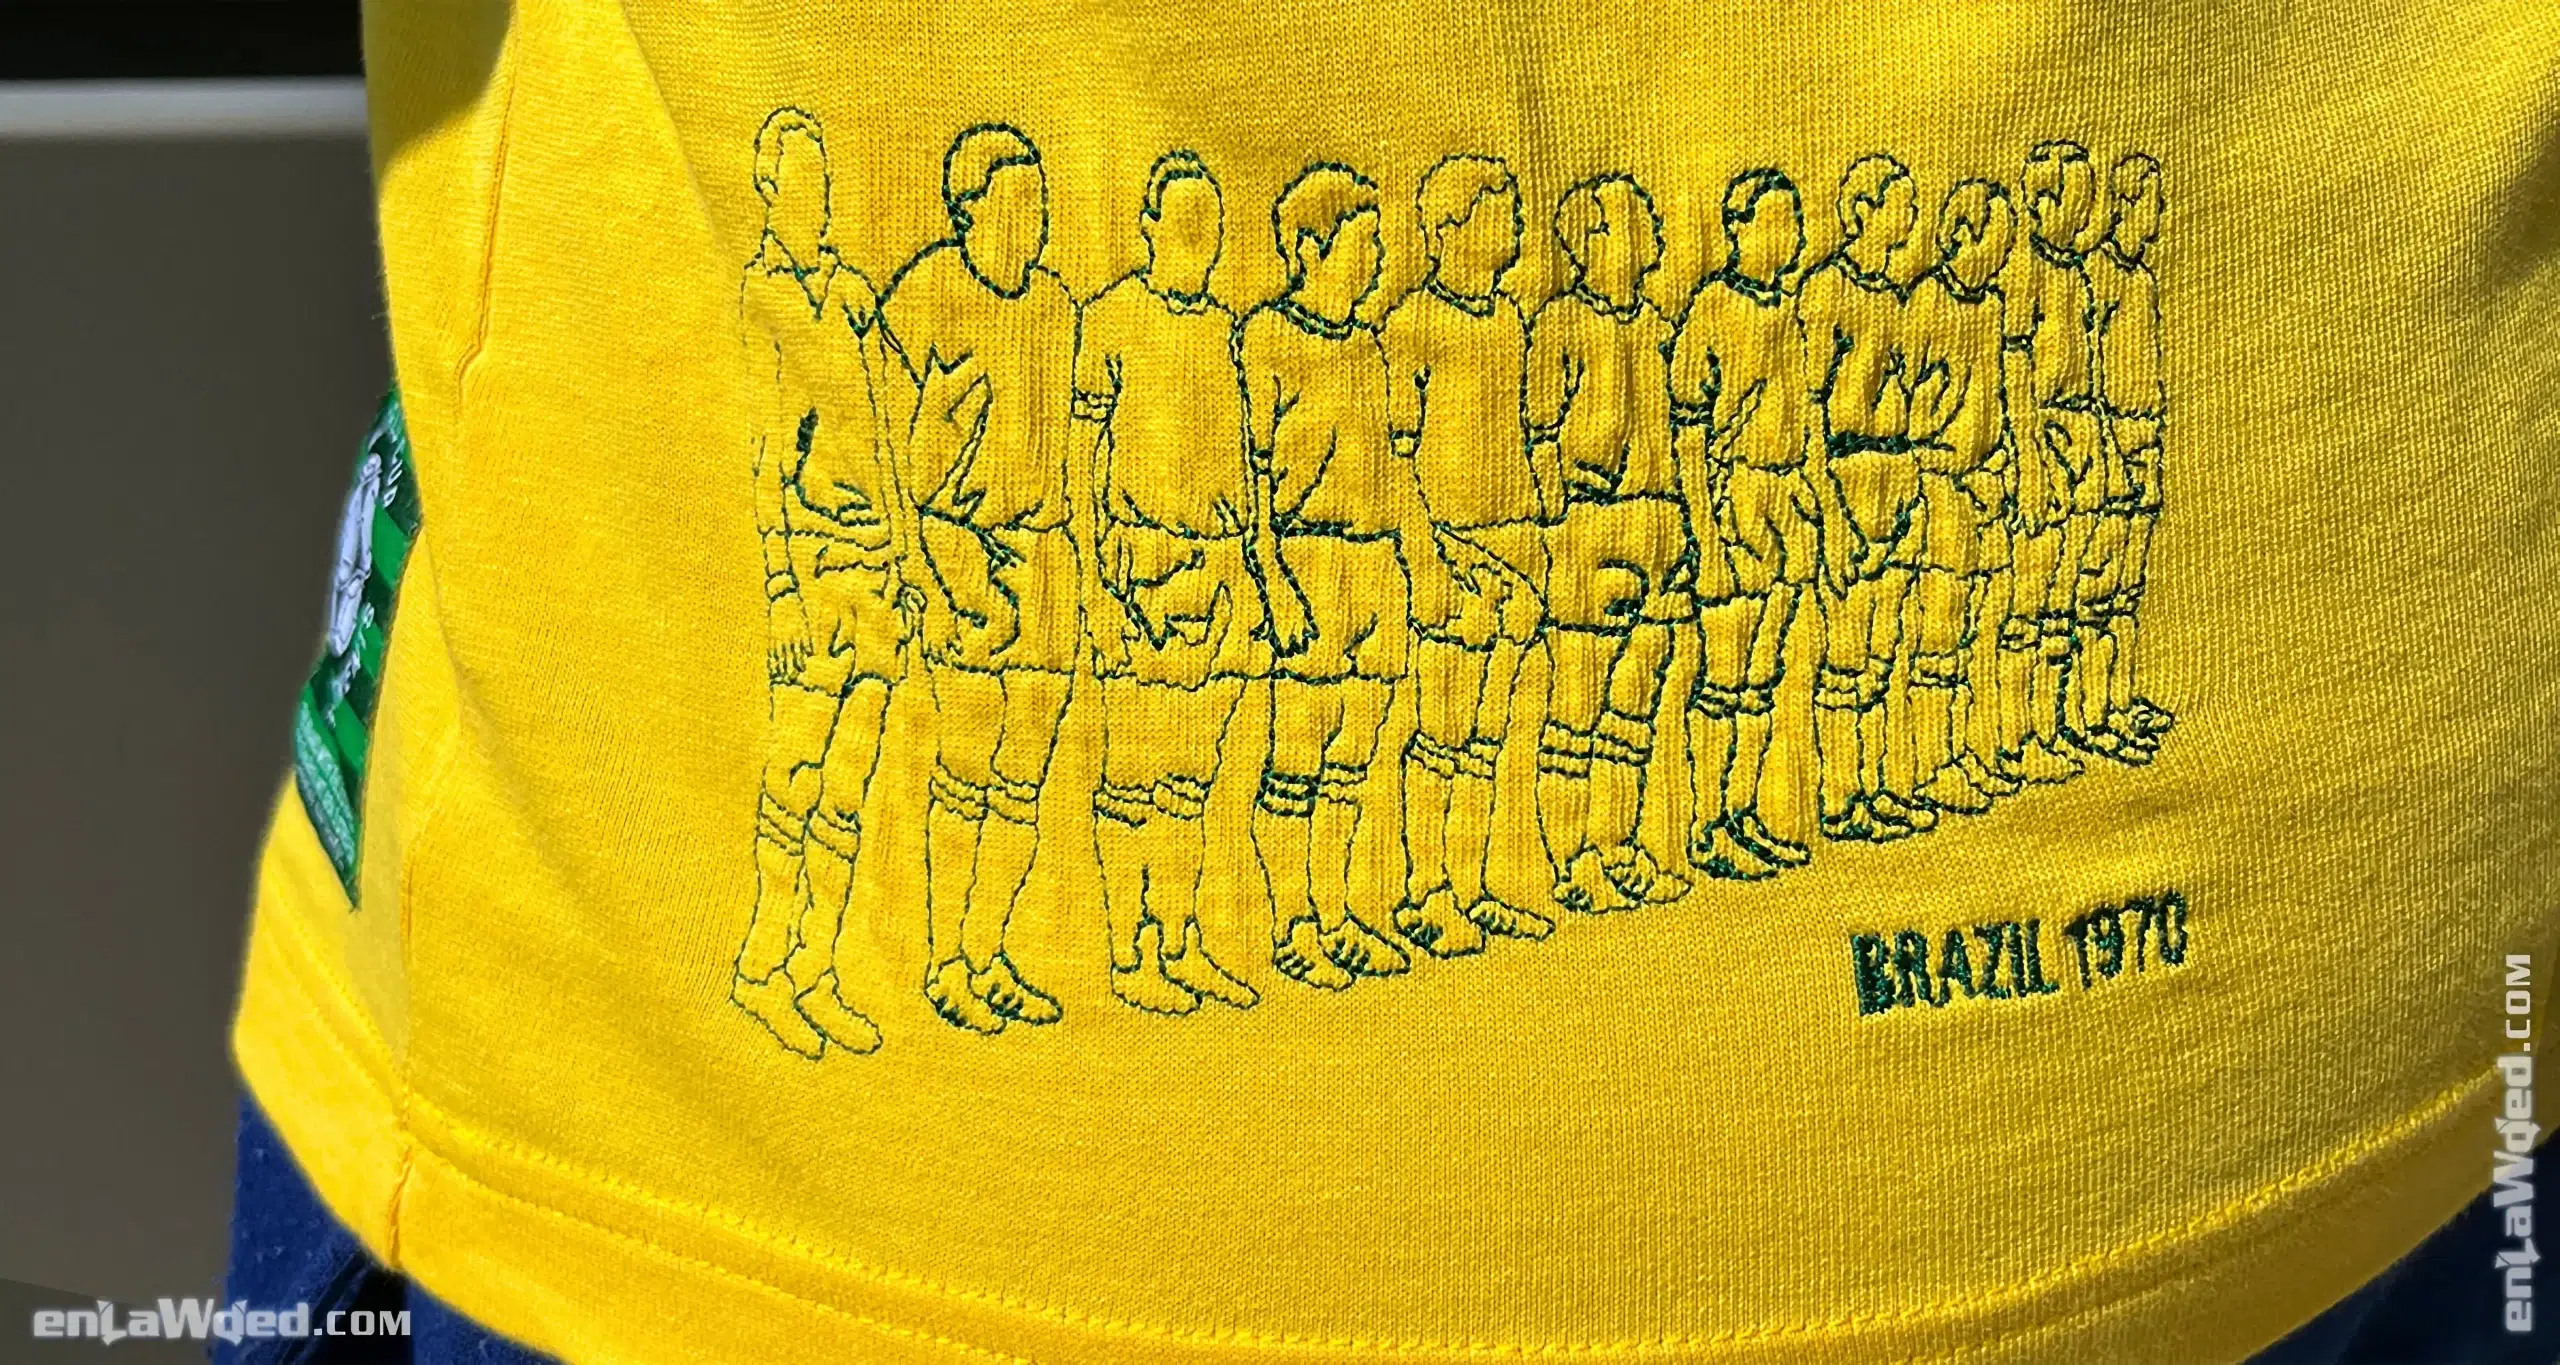 Men’s 2006 Brasil ’70 T-Shirt by Adidas Originals: Memorable (EnLawded.com file #lmchk90218ip2y123507kg9st)